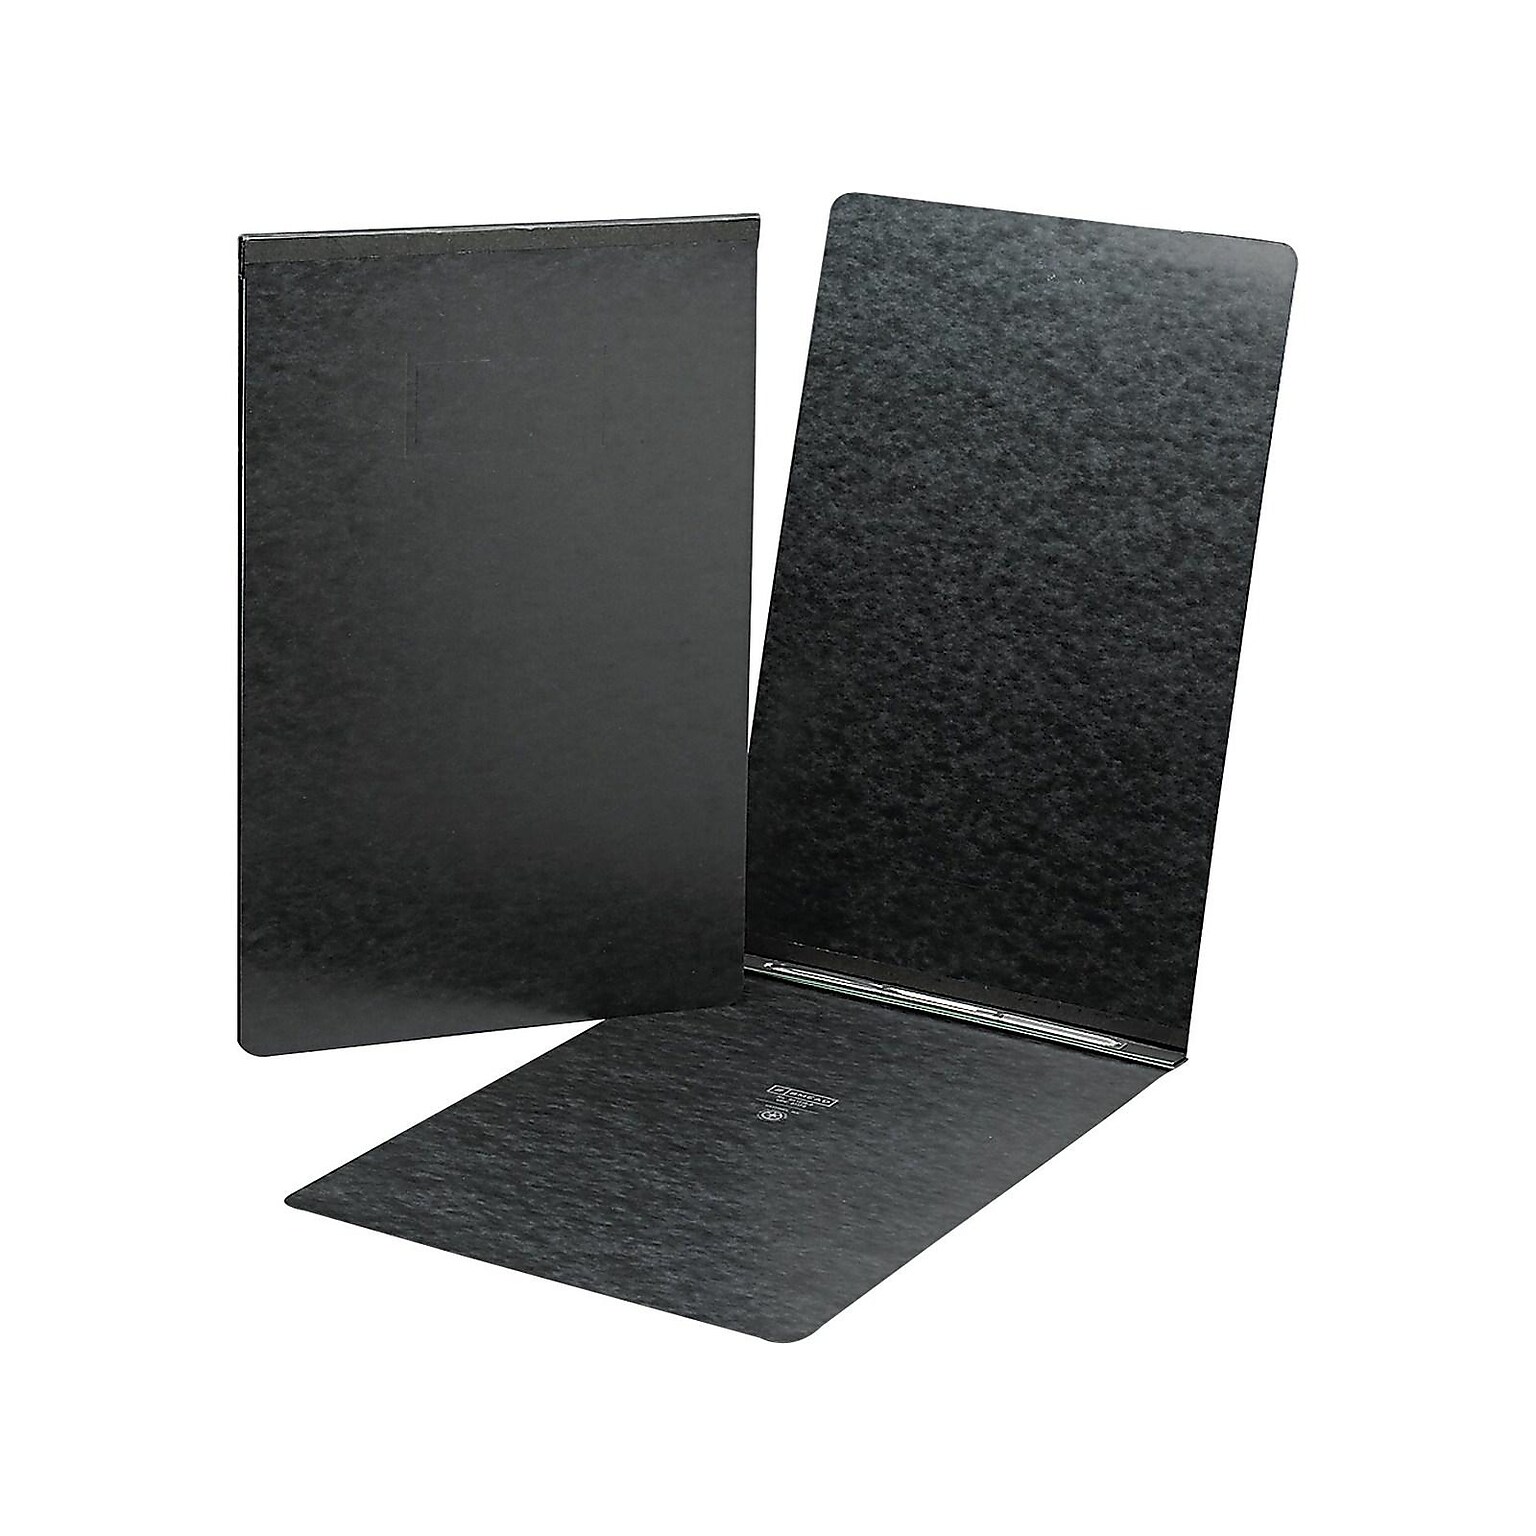 Smead Premium Pressboard 2-Prong Report Cover, Tabloid Size, Black, 10/Box (81179)